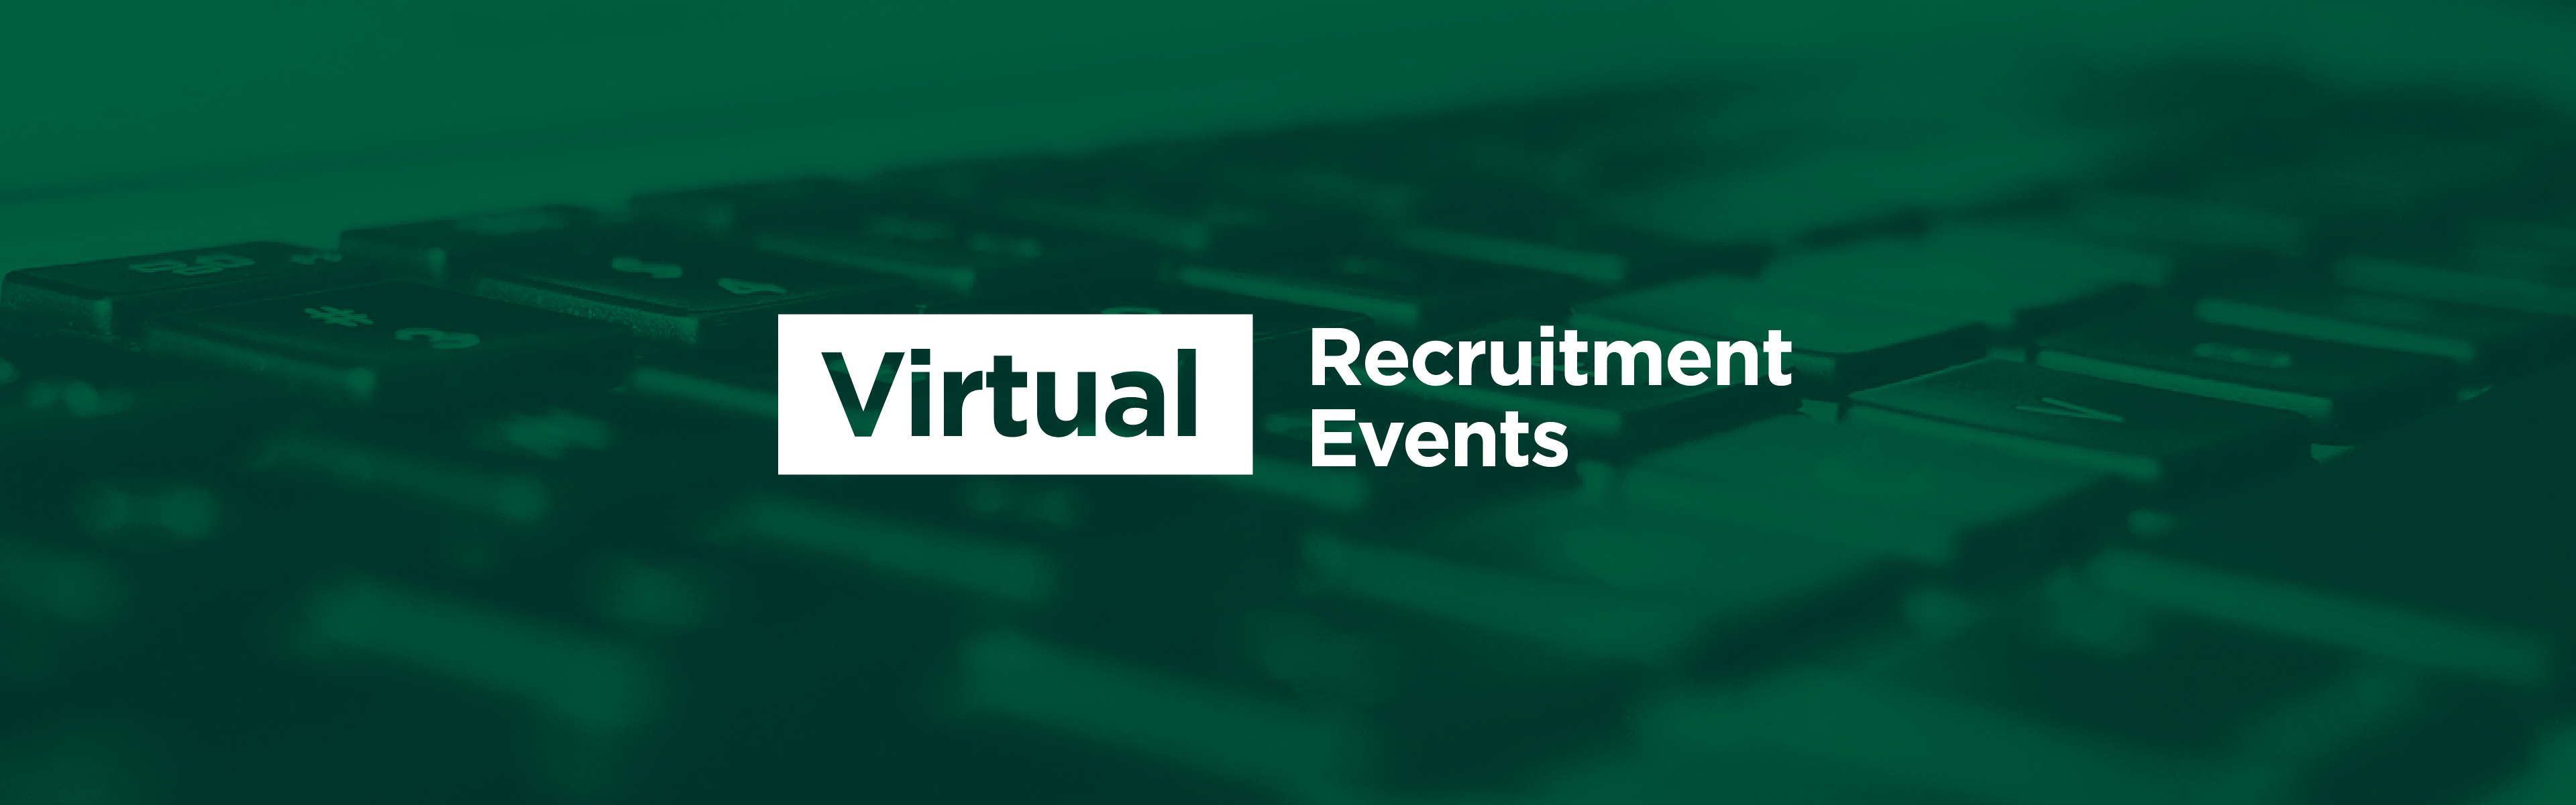 Virtual Recruitment Events